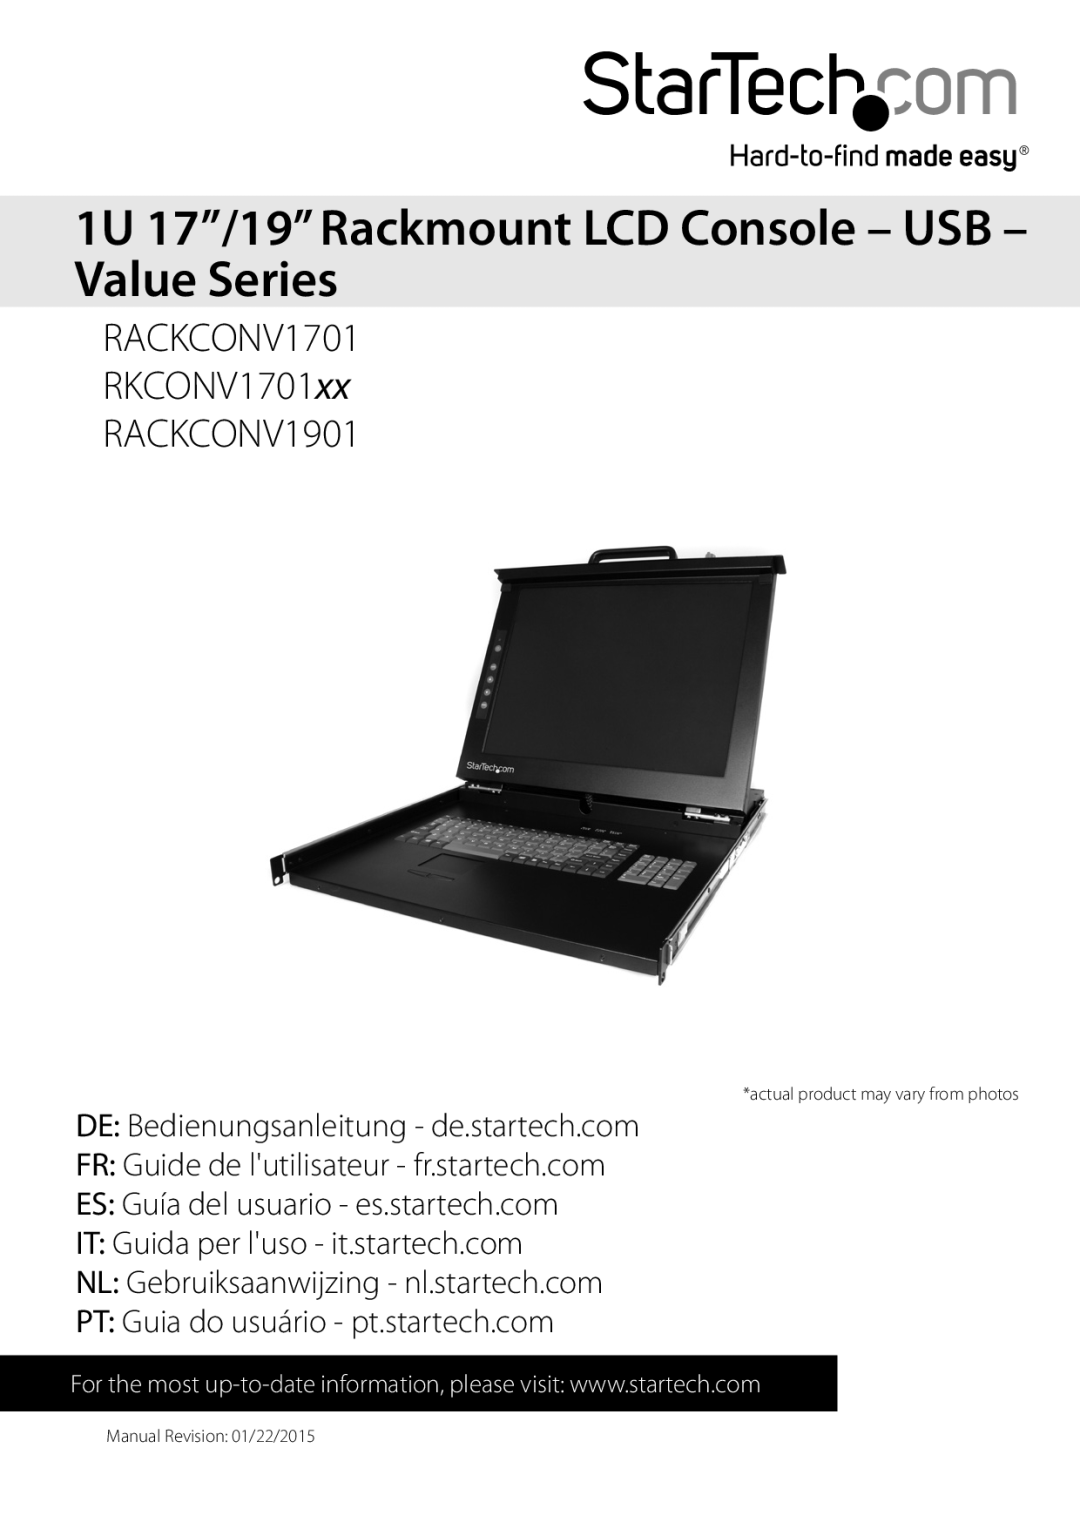 StarTech.com RACKCONV1901 manual 1U 17”/19” Rackmount LCD Console - USB - Value Series, Manual Revision 01/22/2015 